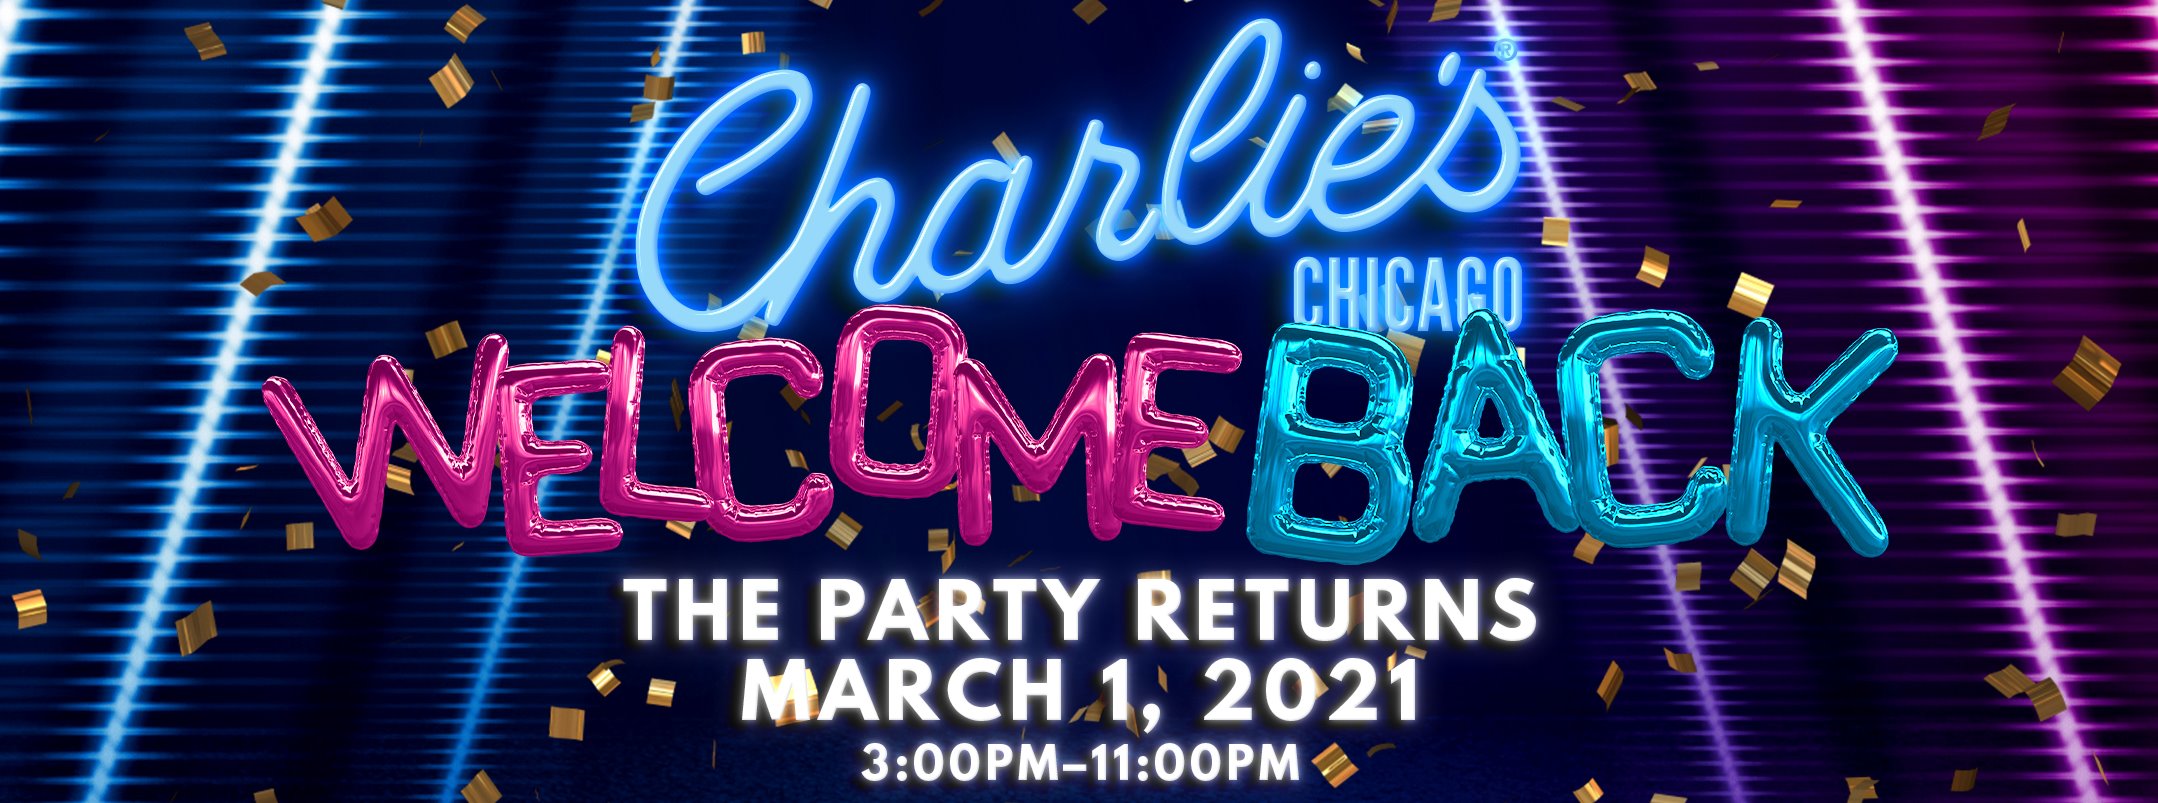 Charlie’s Chicago